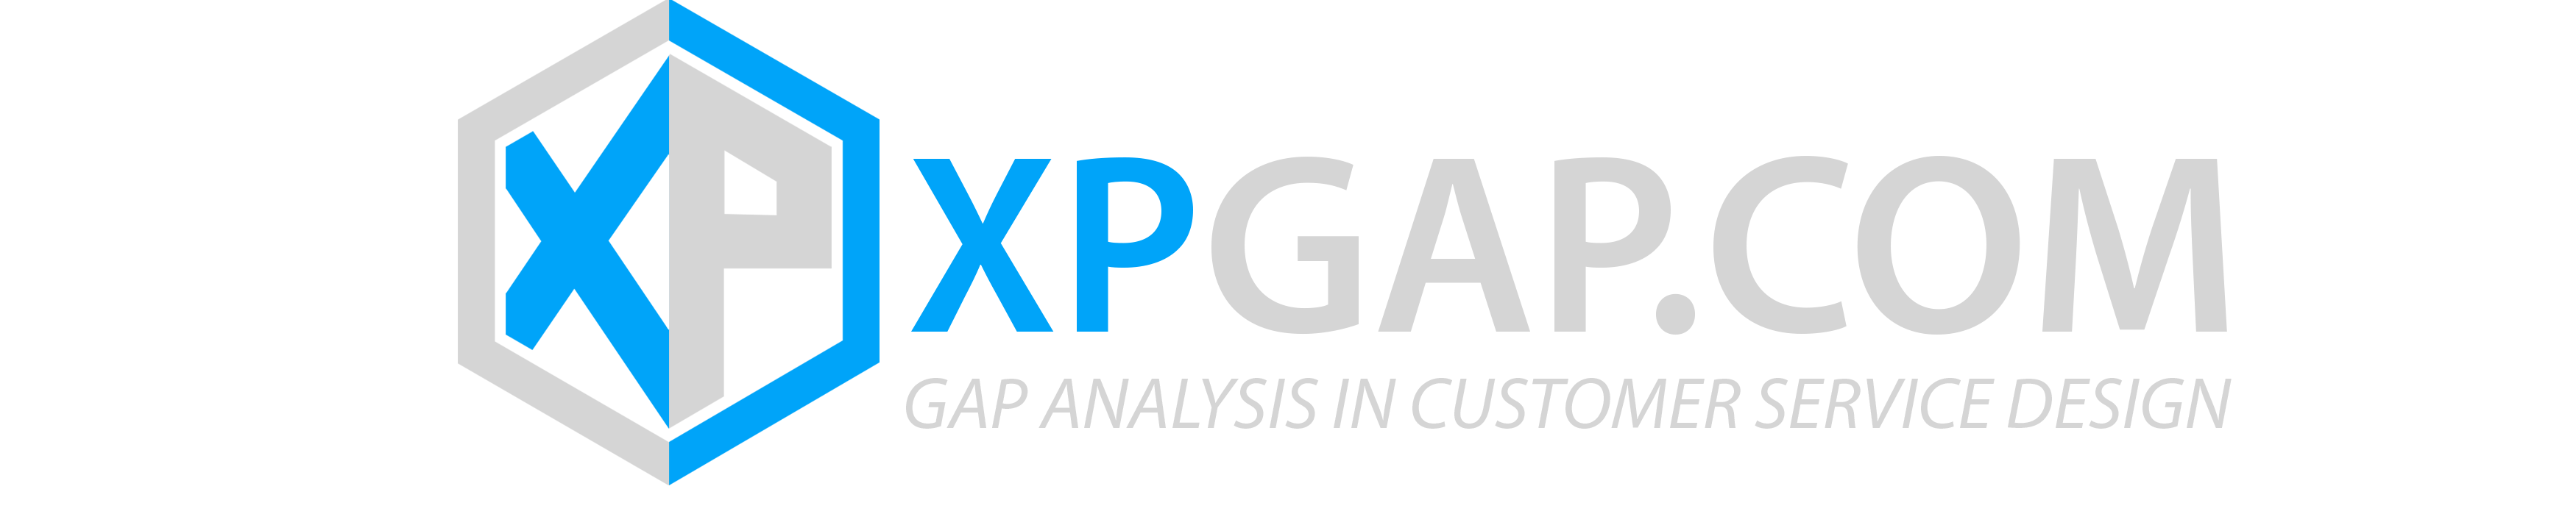 Gap Analysis in Customer Service Design | xpgap.com